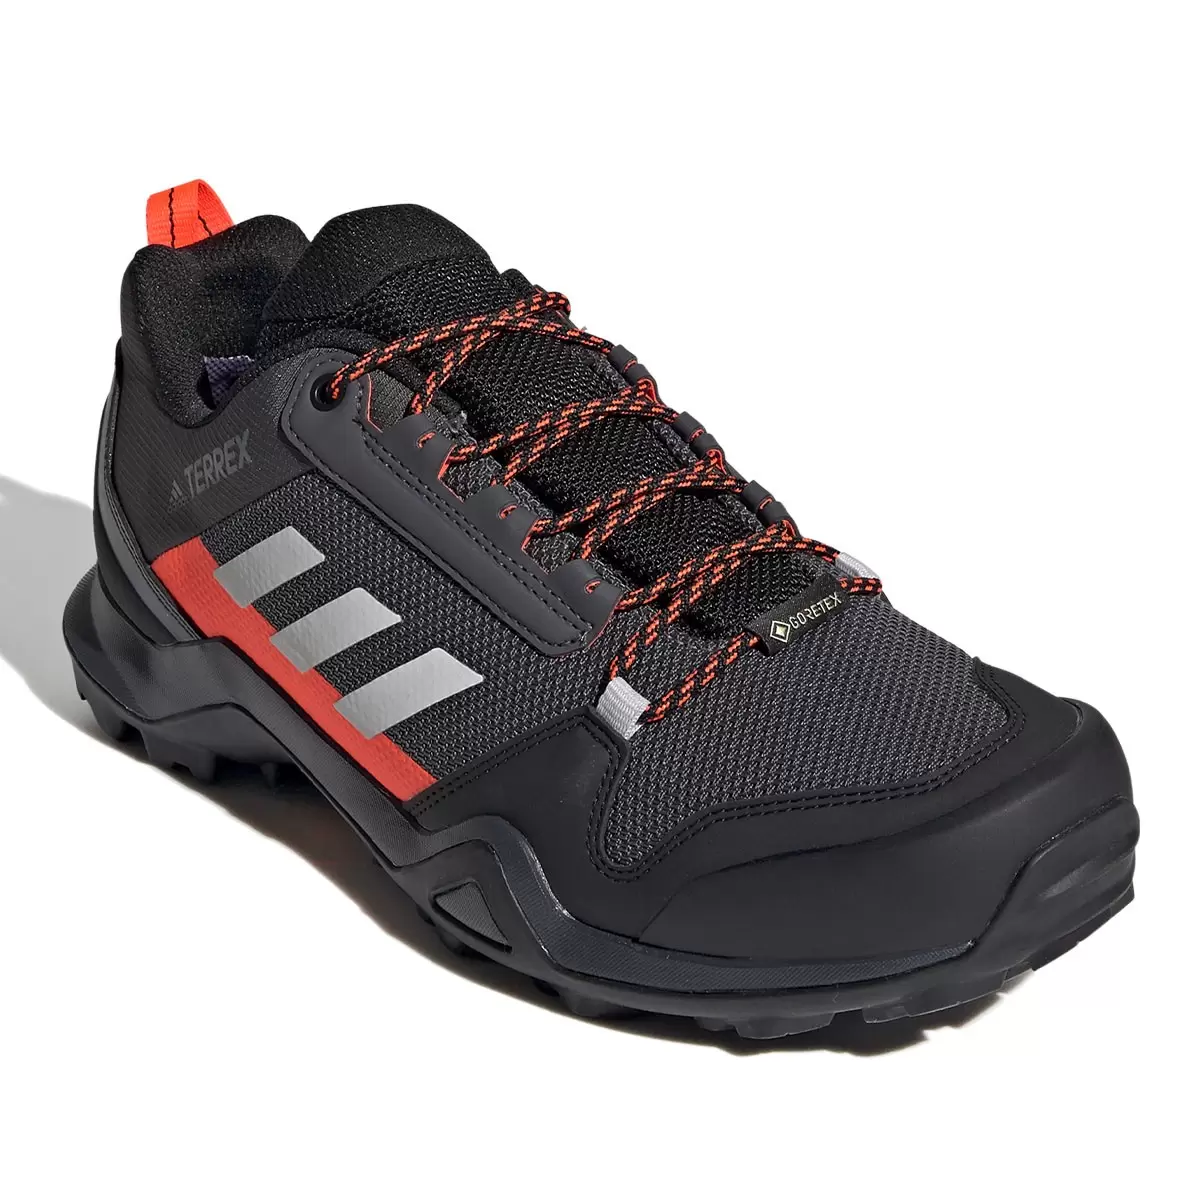 Adidas 男 Terrex 登山鞋 黑 US 9.5